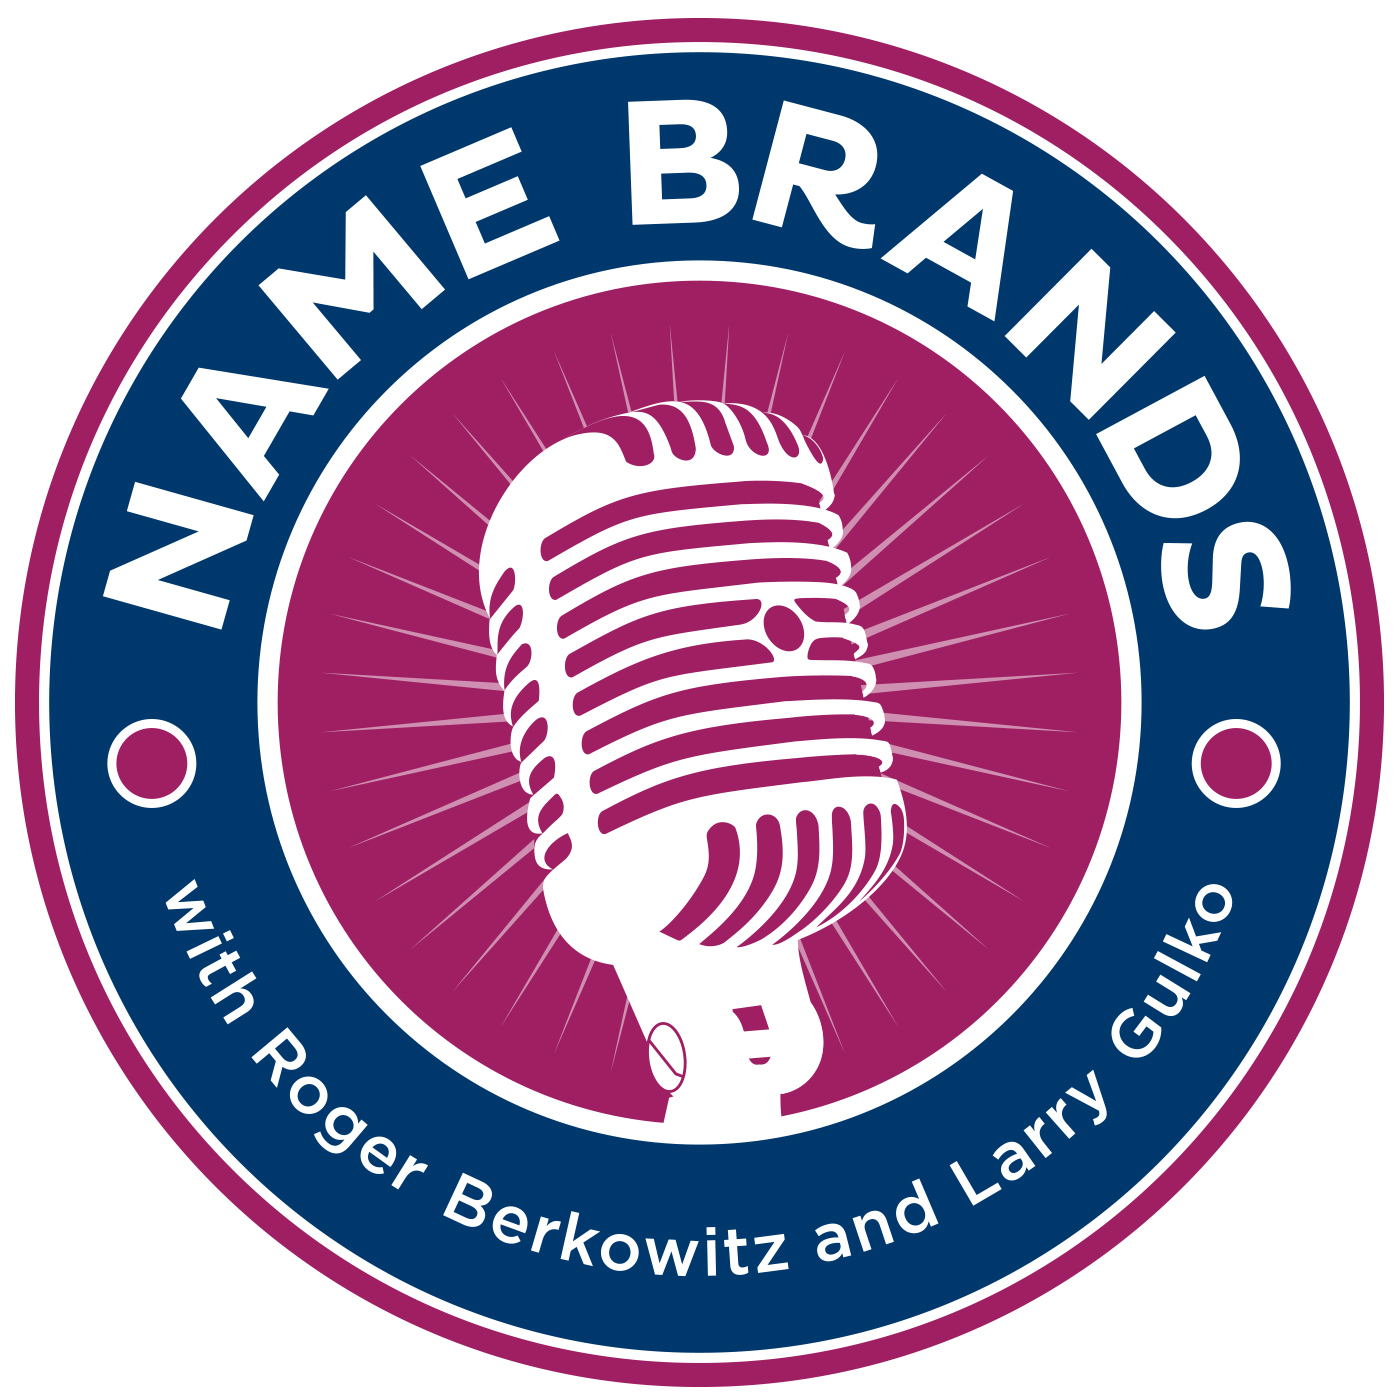 Name Brands: Perdue Farms Chairman, Jim Perdue